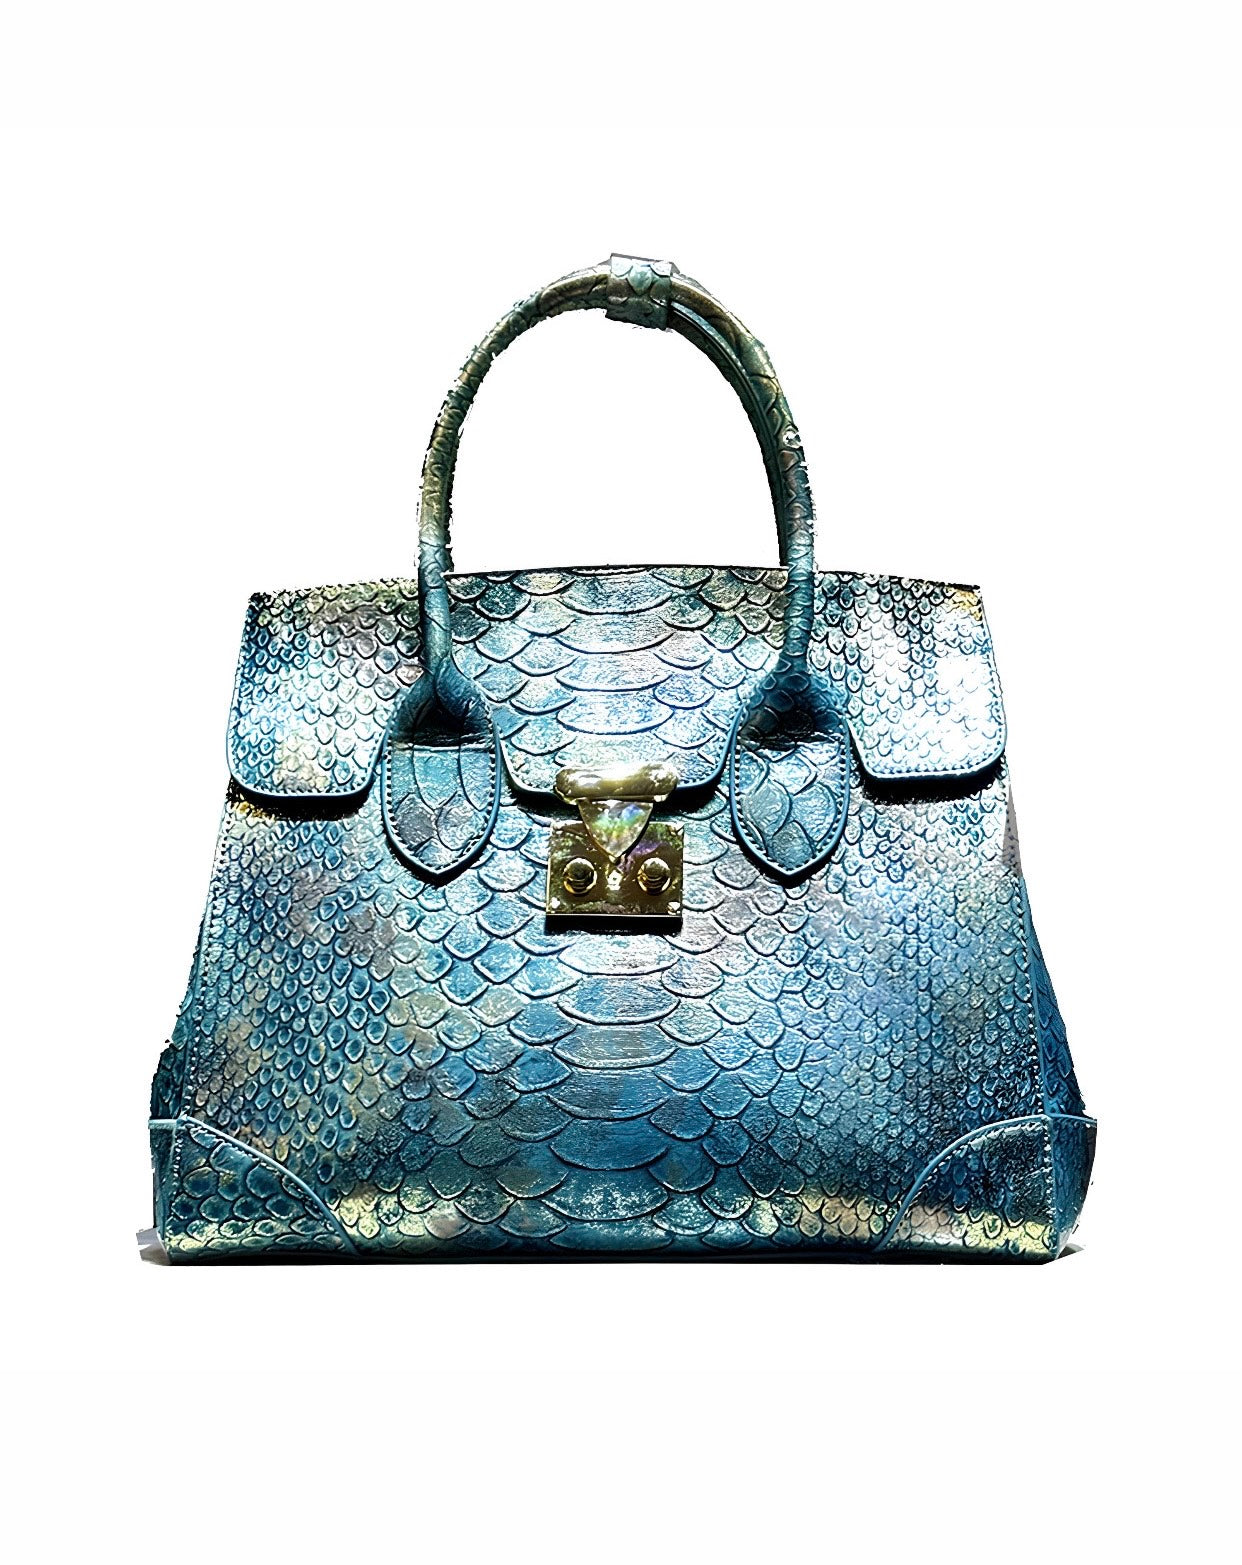 The Aqua Marine Borsetta: A luxury snake skin replica textured handbag with contrasting blue accents.